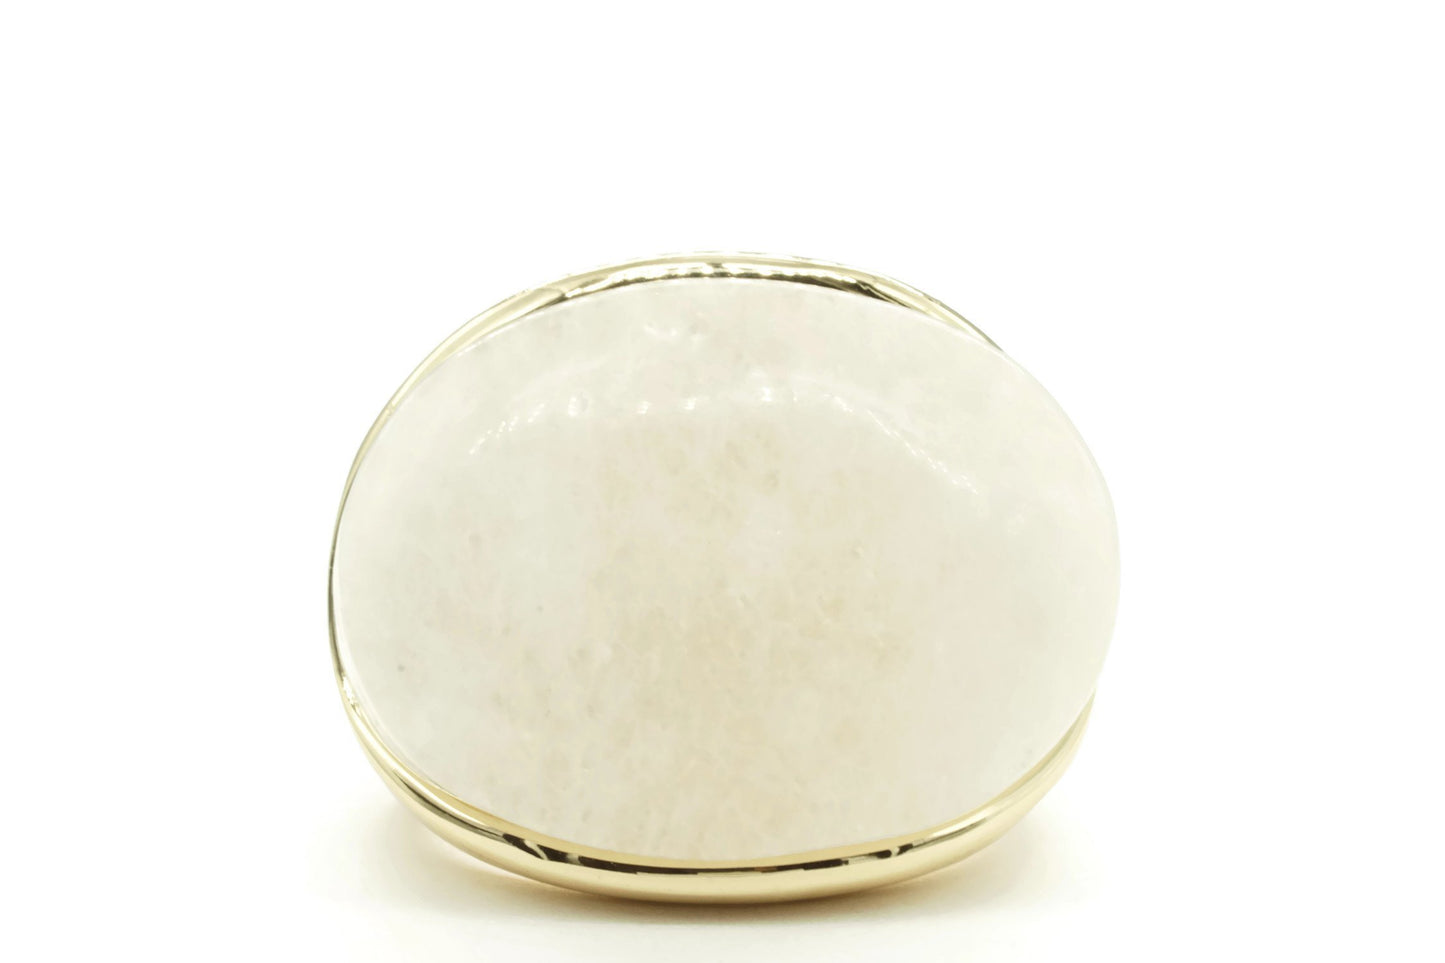 Large Oval Genuine White Stone Ring